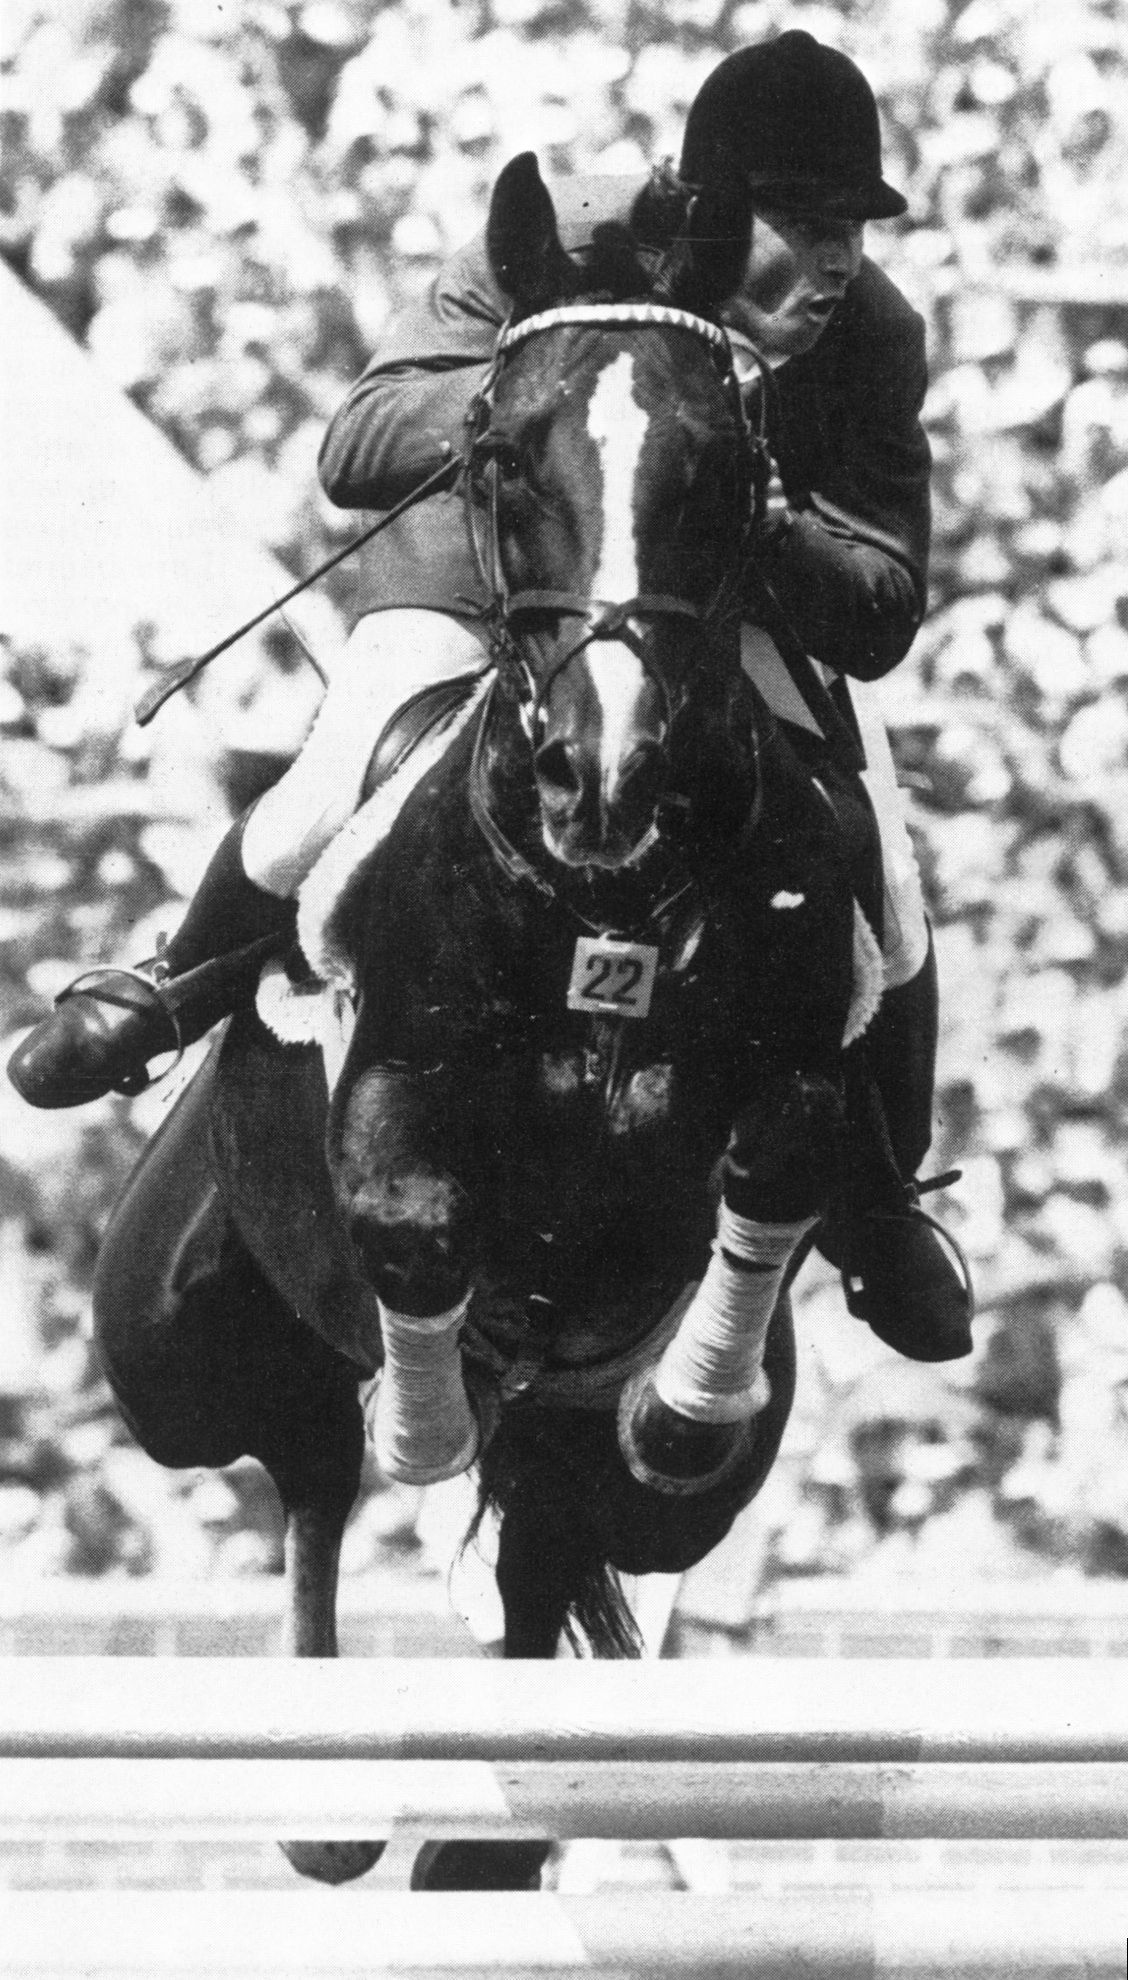 1980 Olympics Silver Medal Winner Nikolai Korolkov on Espadron